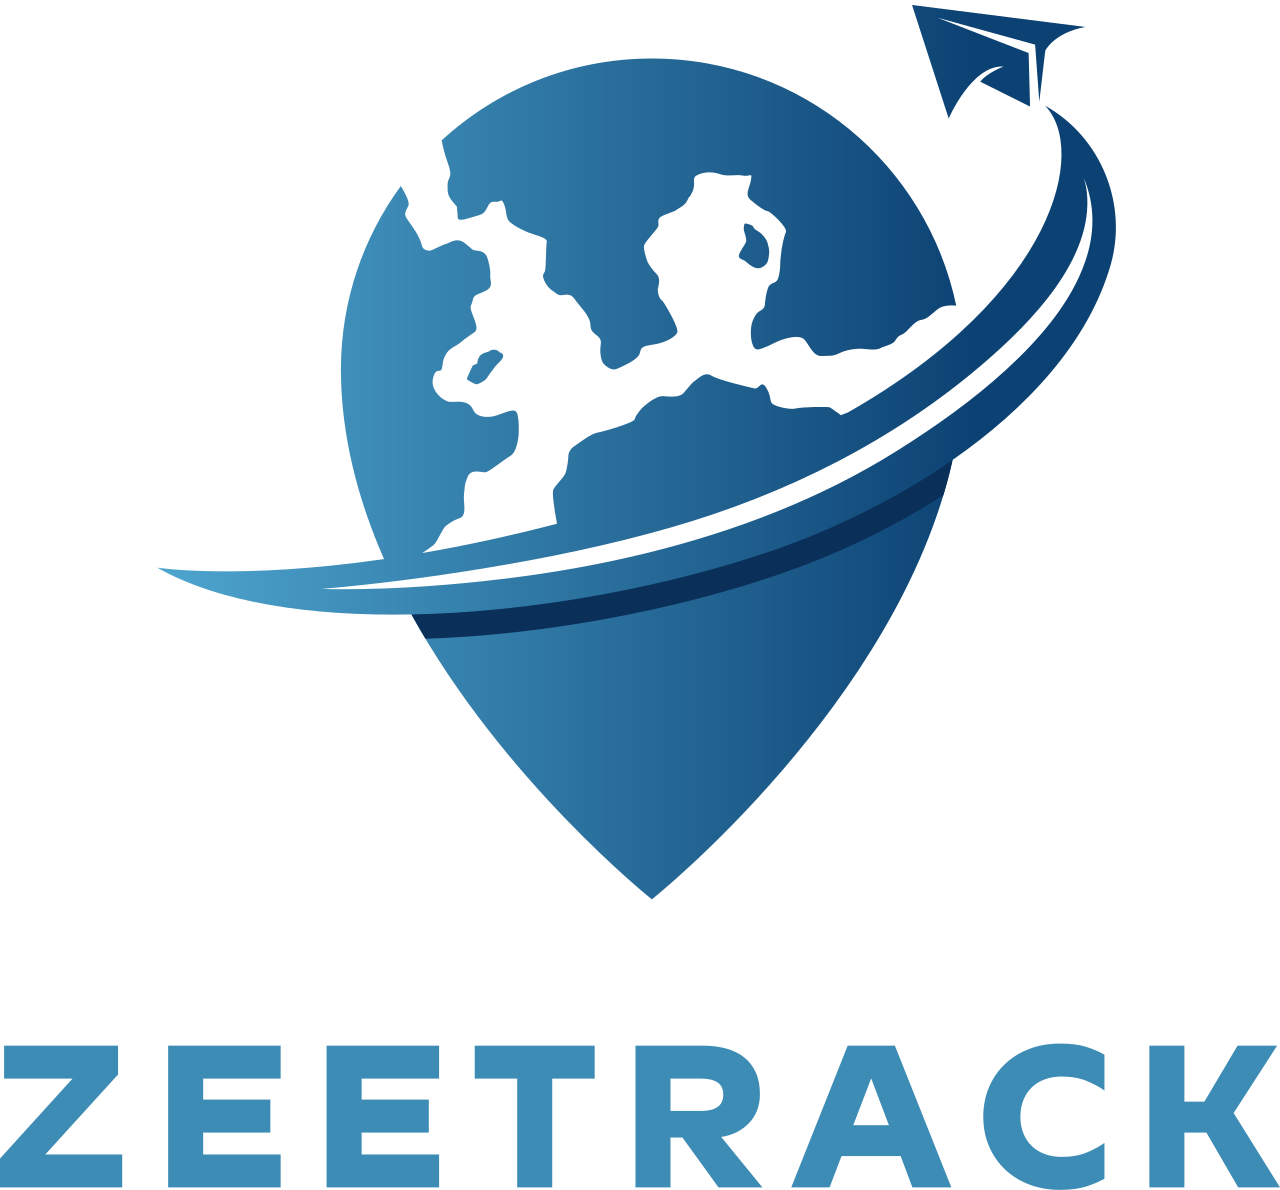 Zeetrack's web page